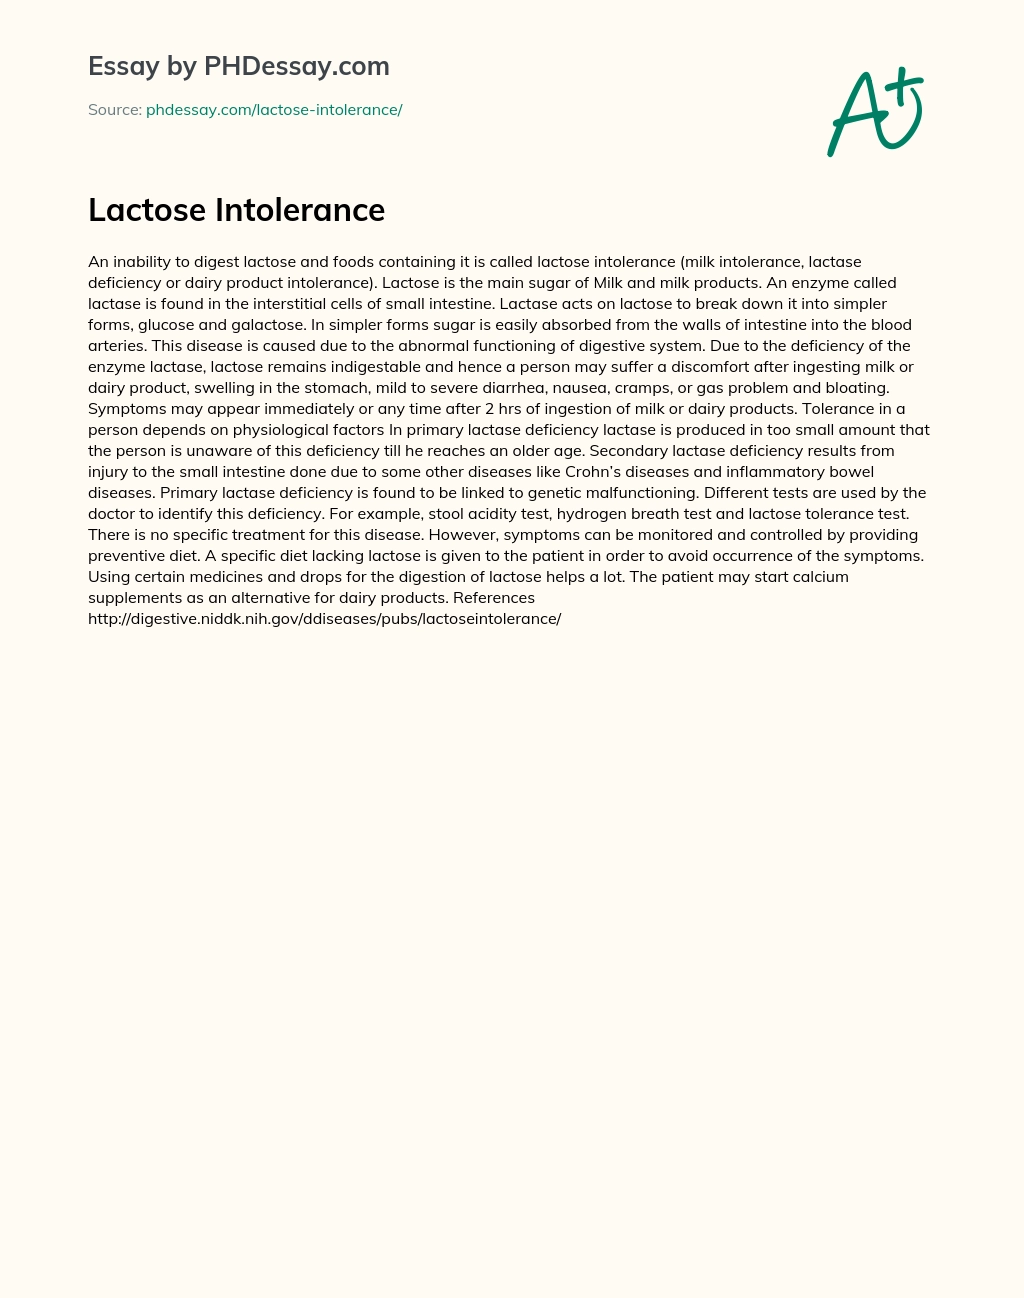 Lactose Intolerance essay